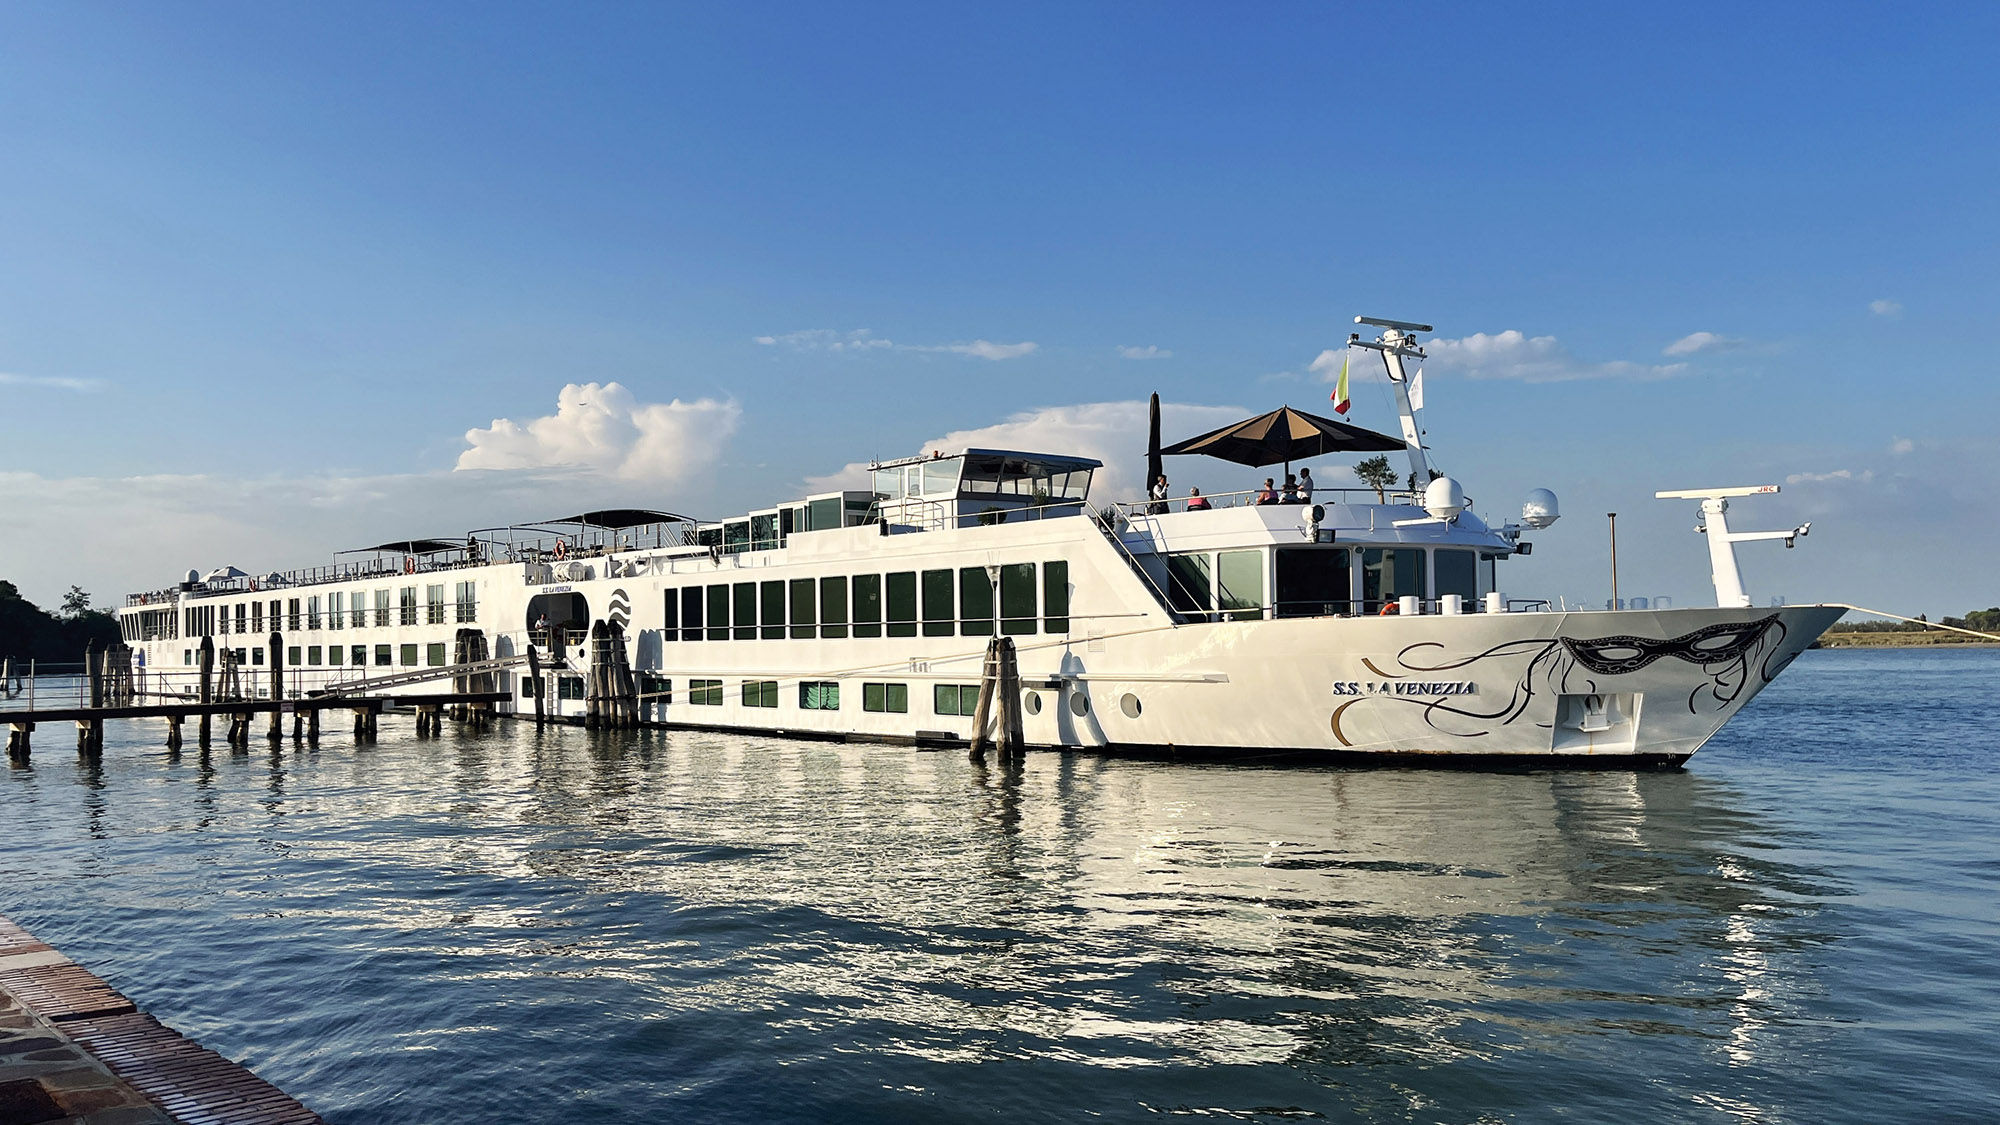 Uniworld's S.S. La Venezia docked in Burano, Italy, a small and colorful island located in the Venetian Lagoon.